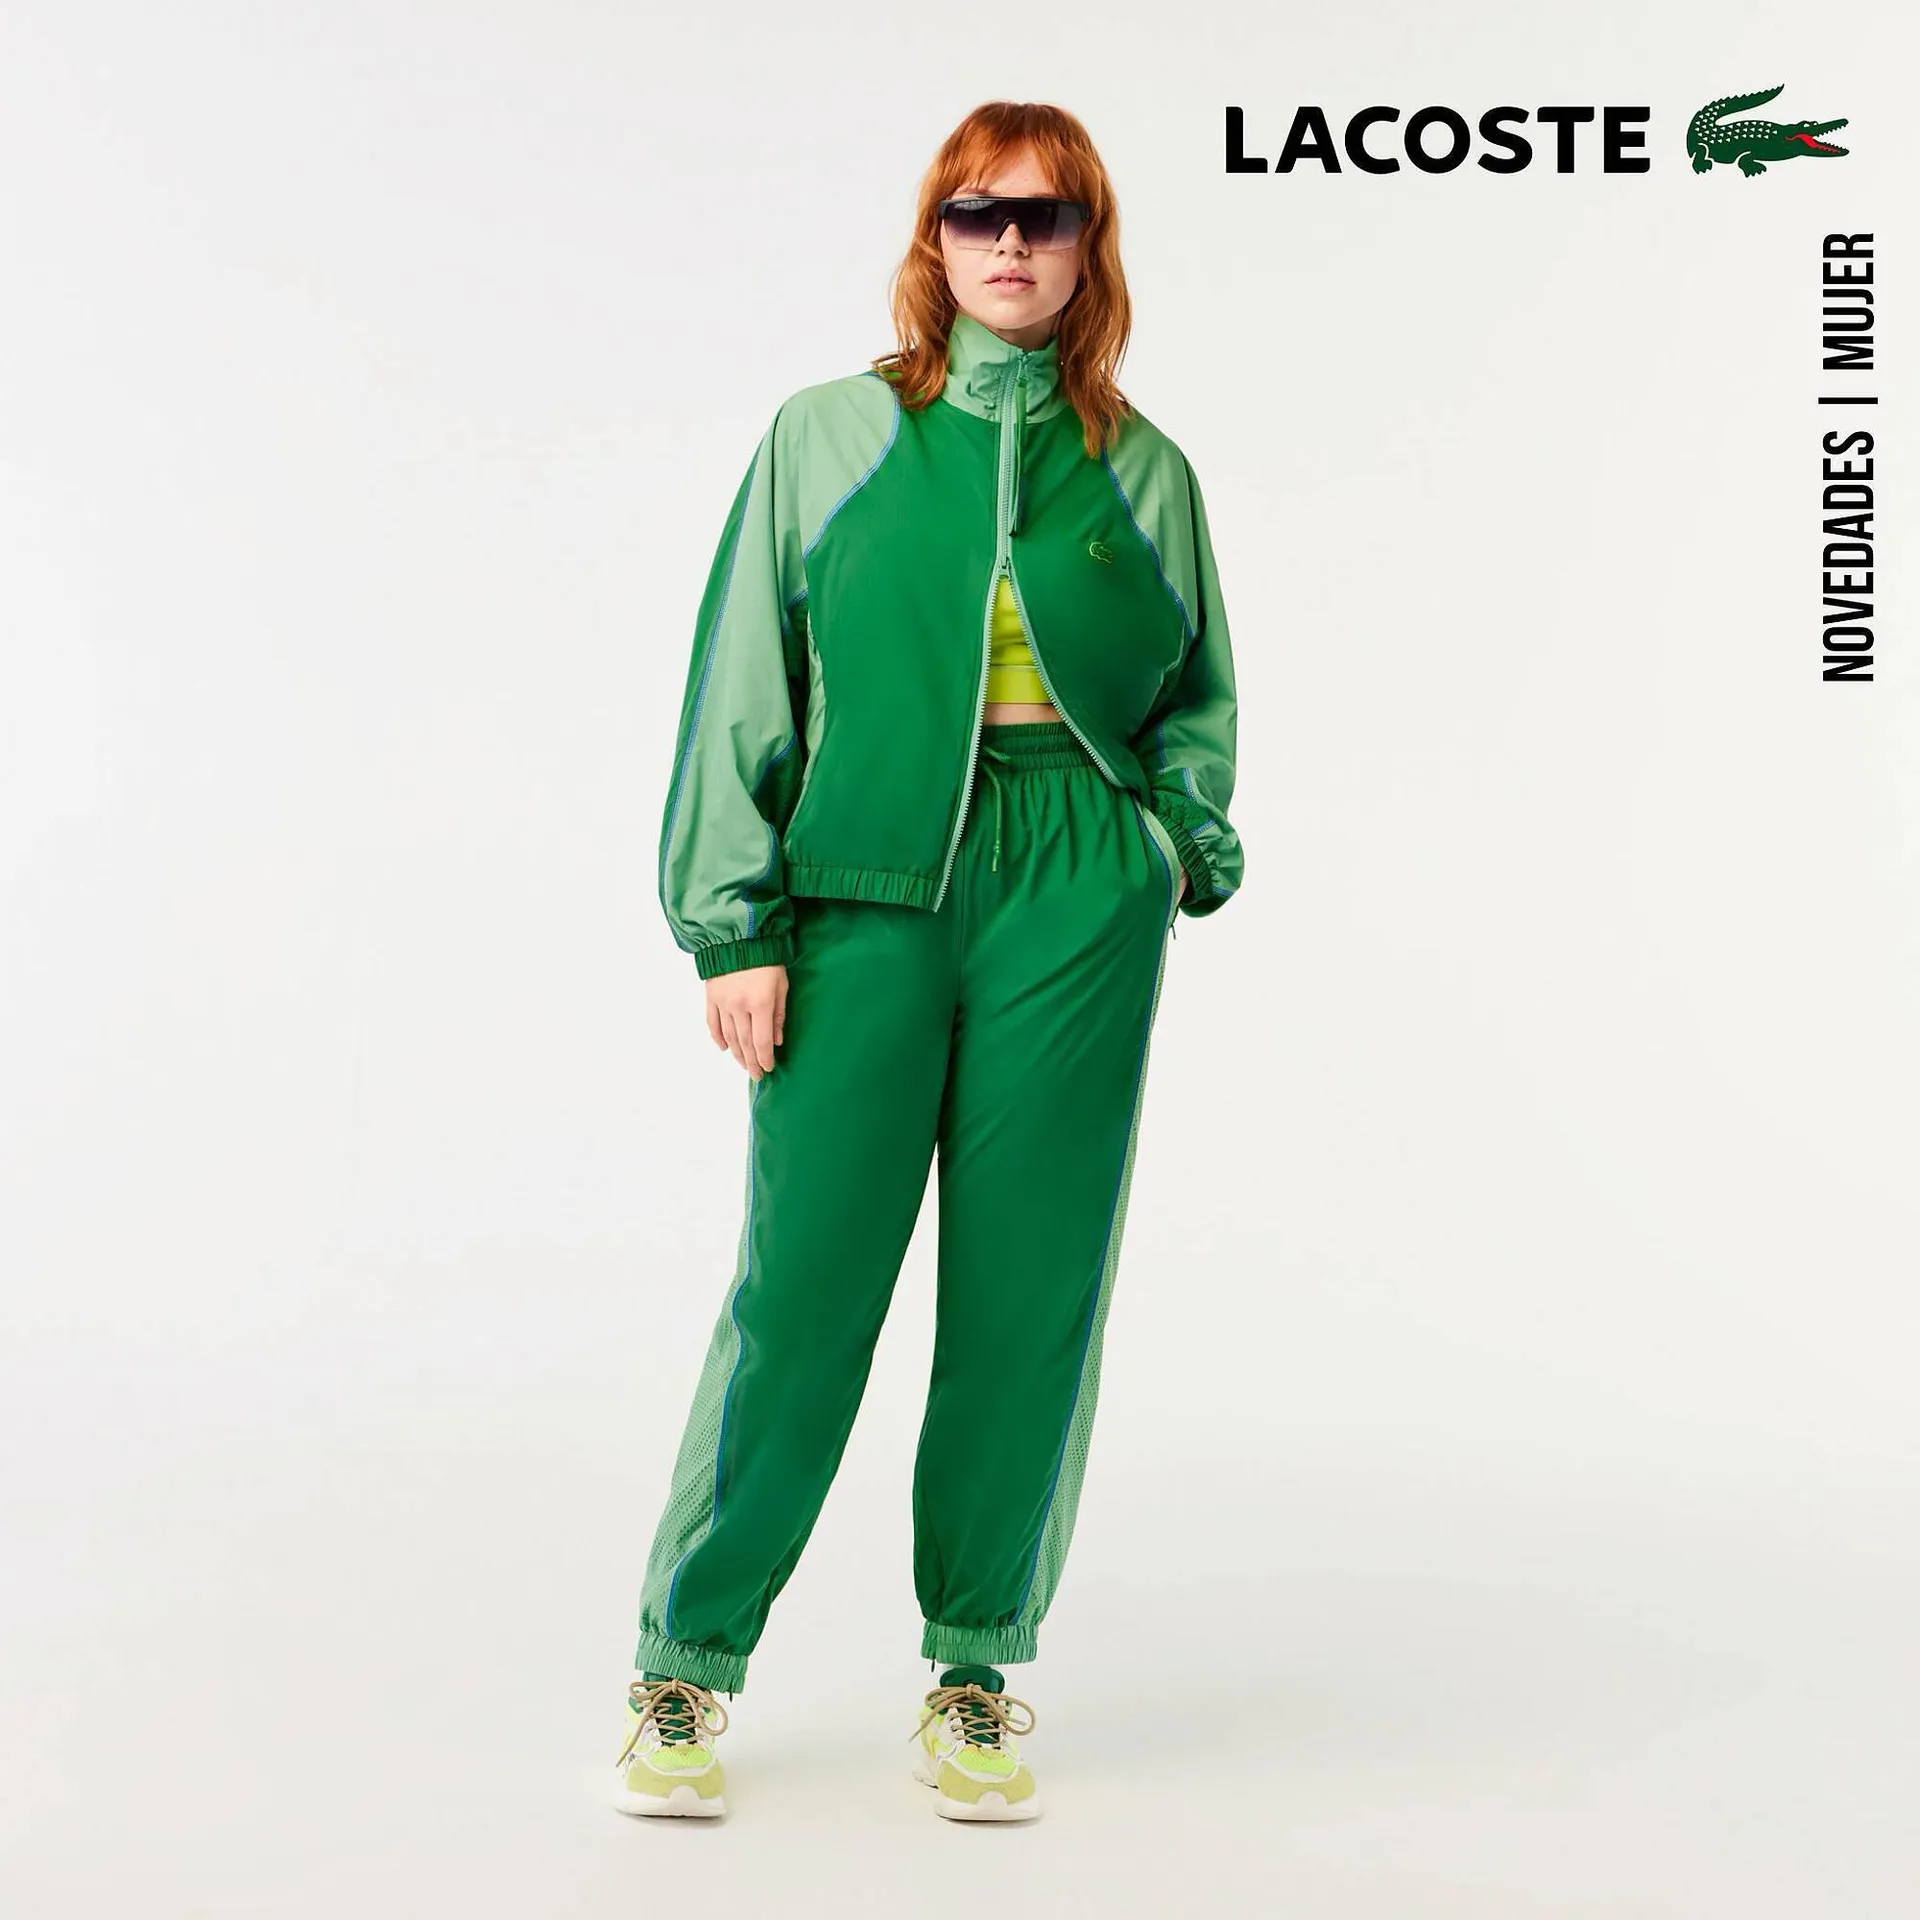 Catálogo Lacoste - 1